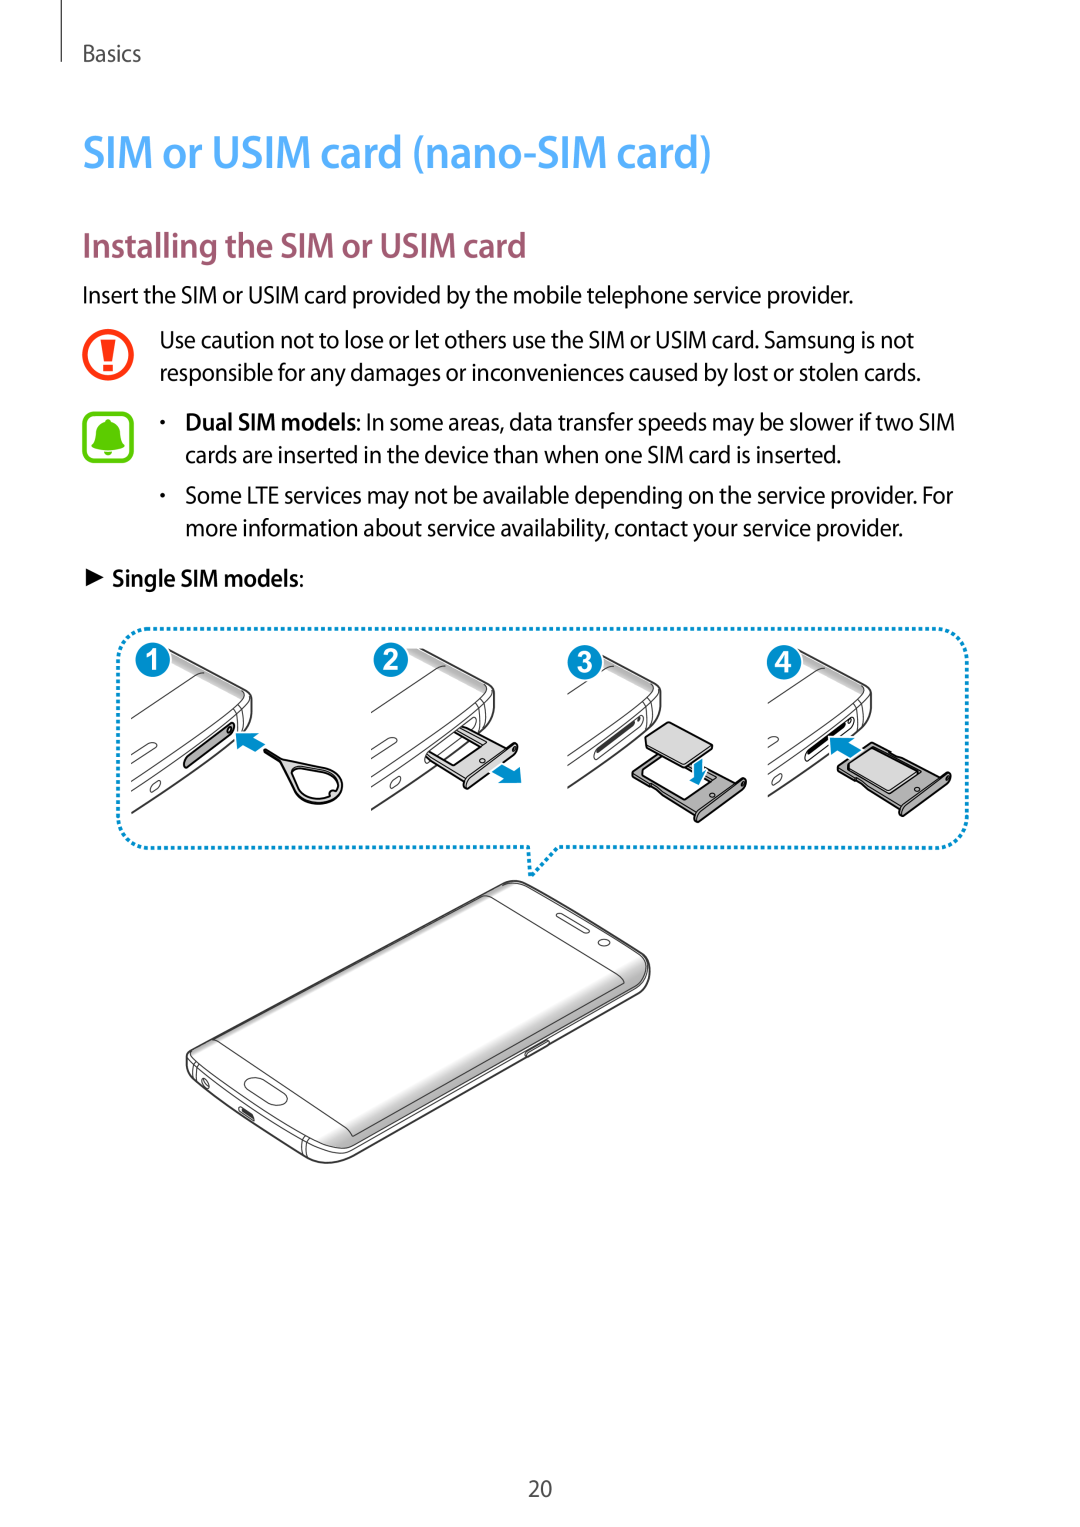 Samsung SM-G925FZDFXEF manual SIM or USIM card nano-SIM card, Installing the SIM or USIM card, Single SIM models, Basics 